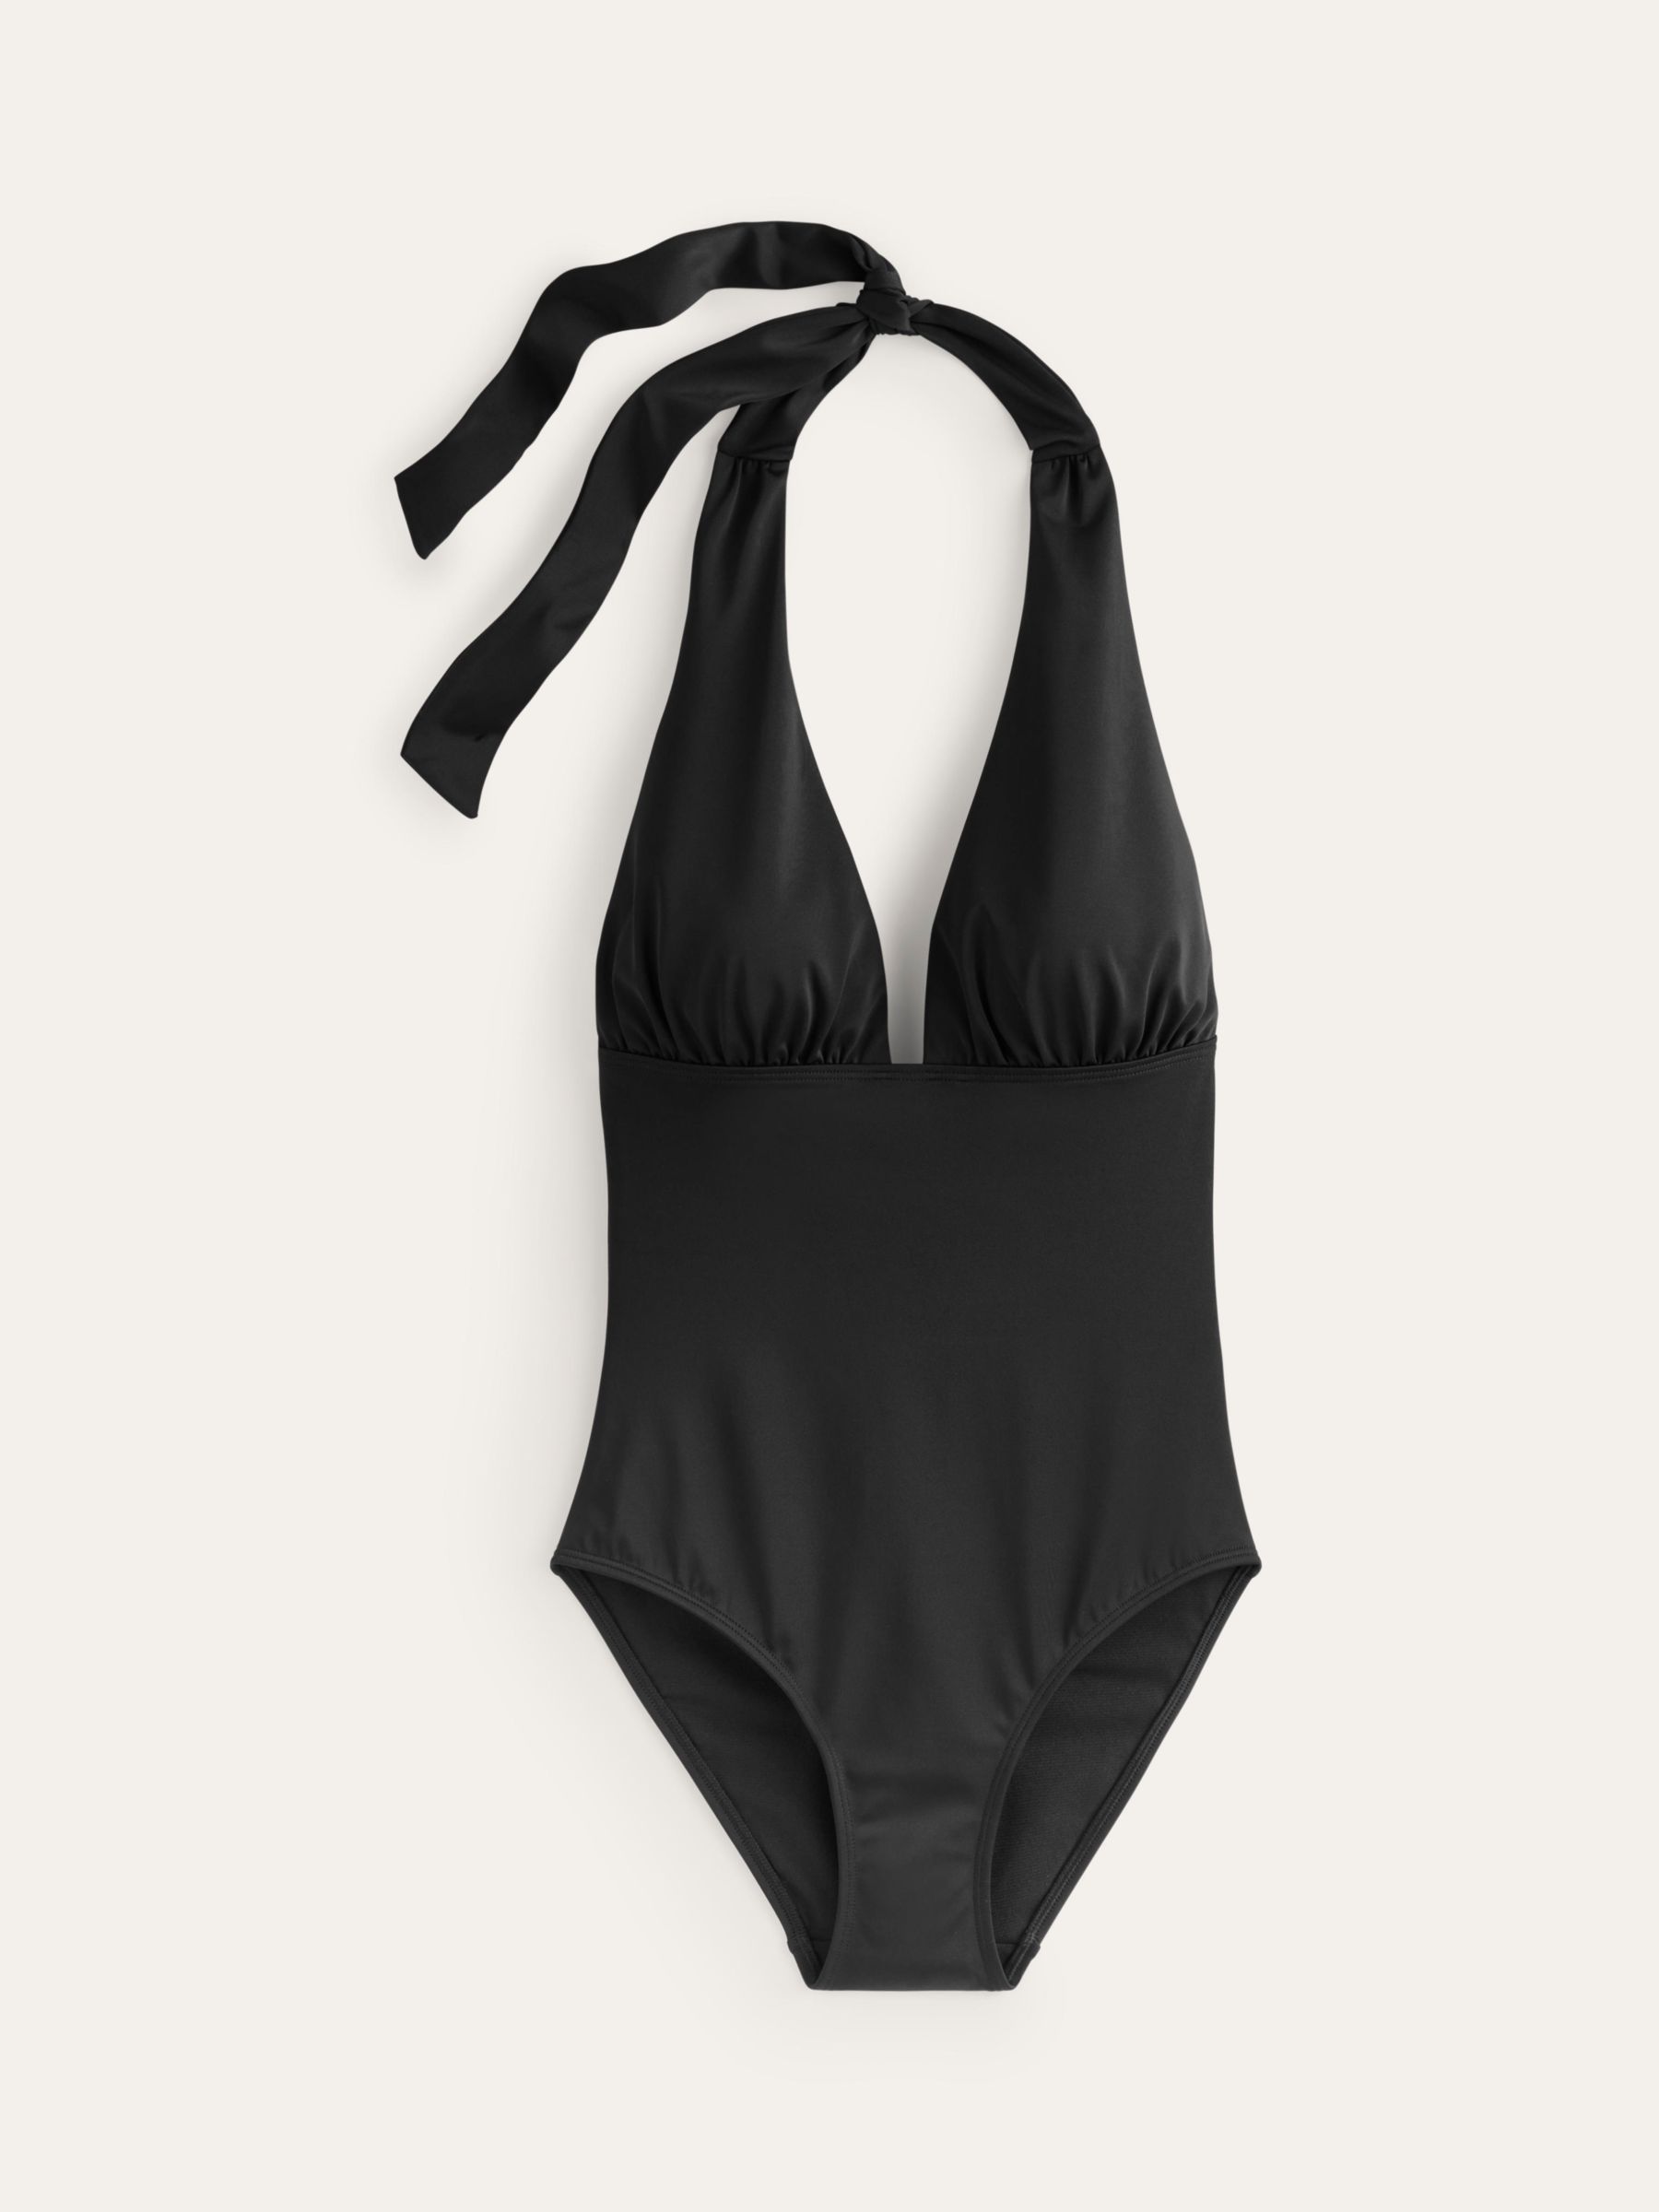 Boden Merano Plunge Halter Neck Swimsuit, Black at John Lewis & Partners